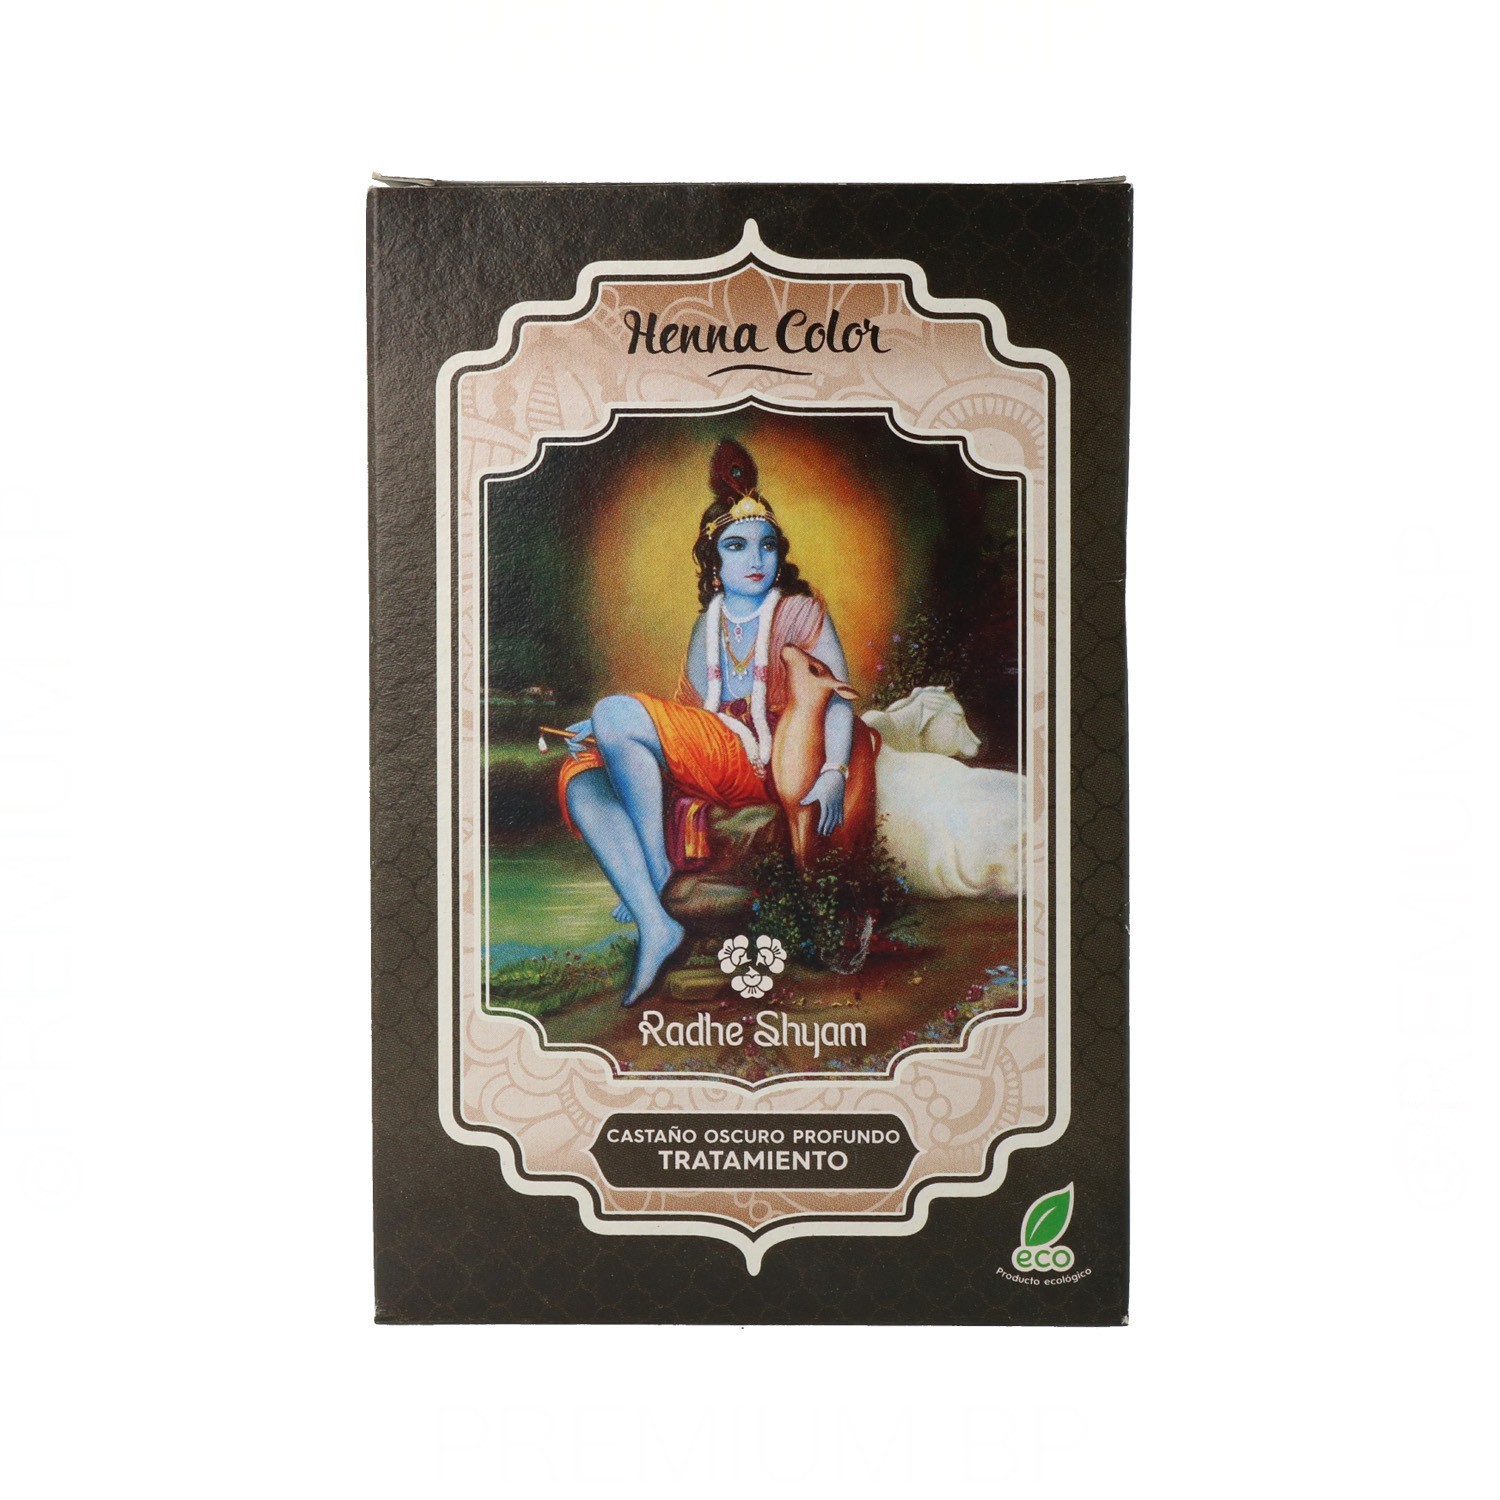 Radhe Shyam Henna En Polvo Castaño Oscuro Profundo Tratamiento 100 gr